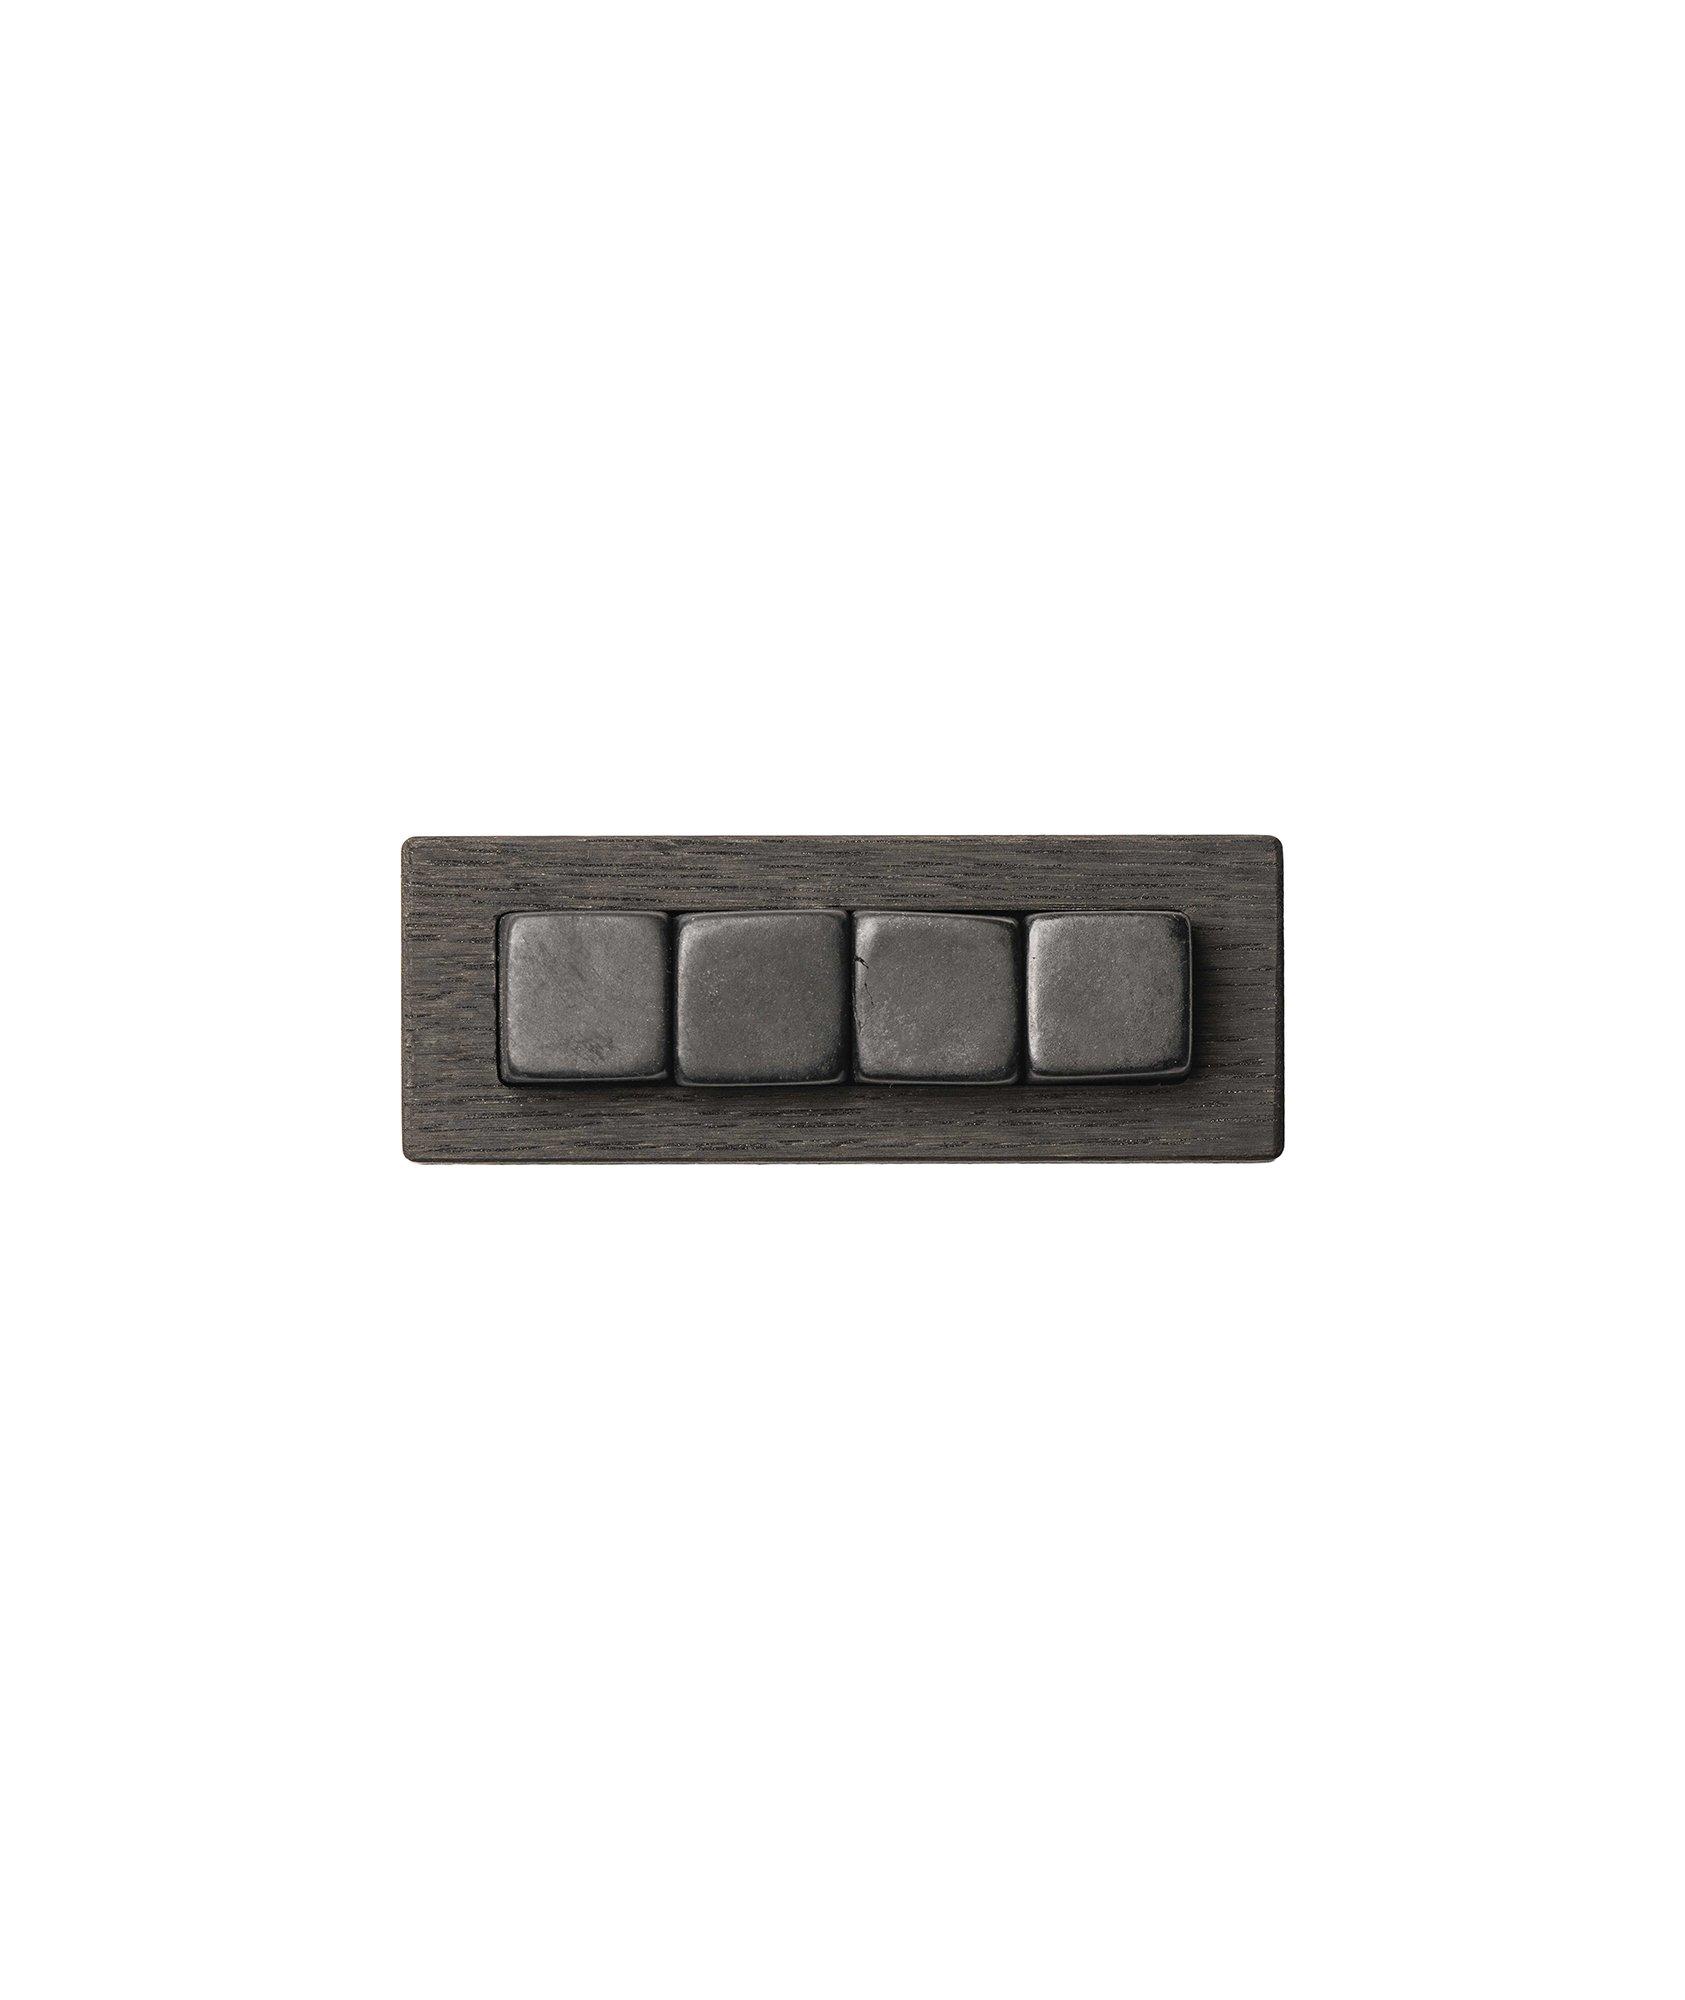 Dark Granulite Whisky Stones 4-Pack Set  image 0